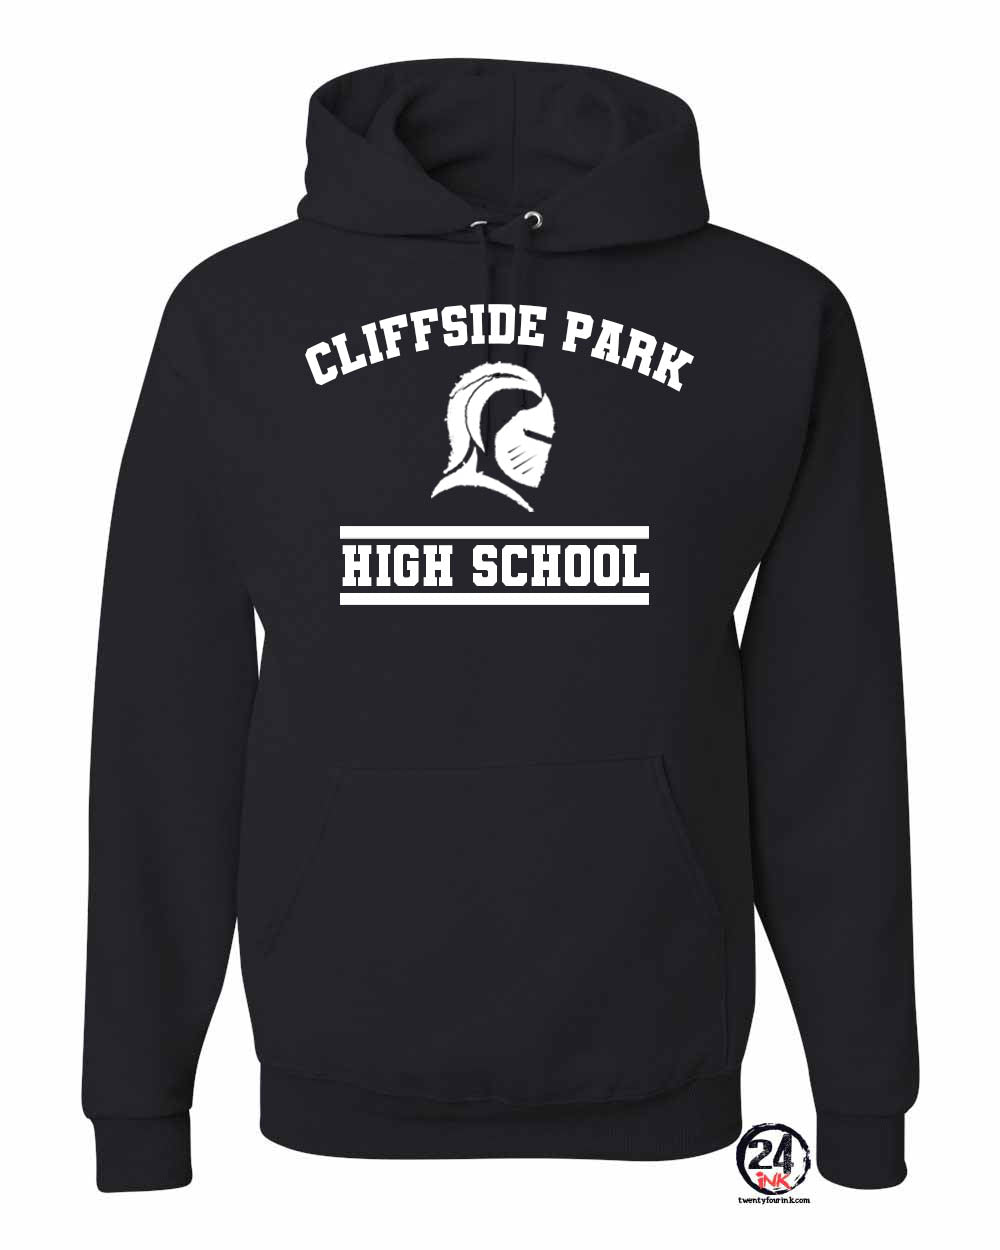 Cliffside Park High School Hooded Sweatshirt